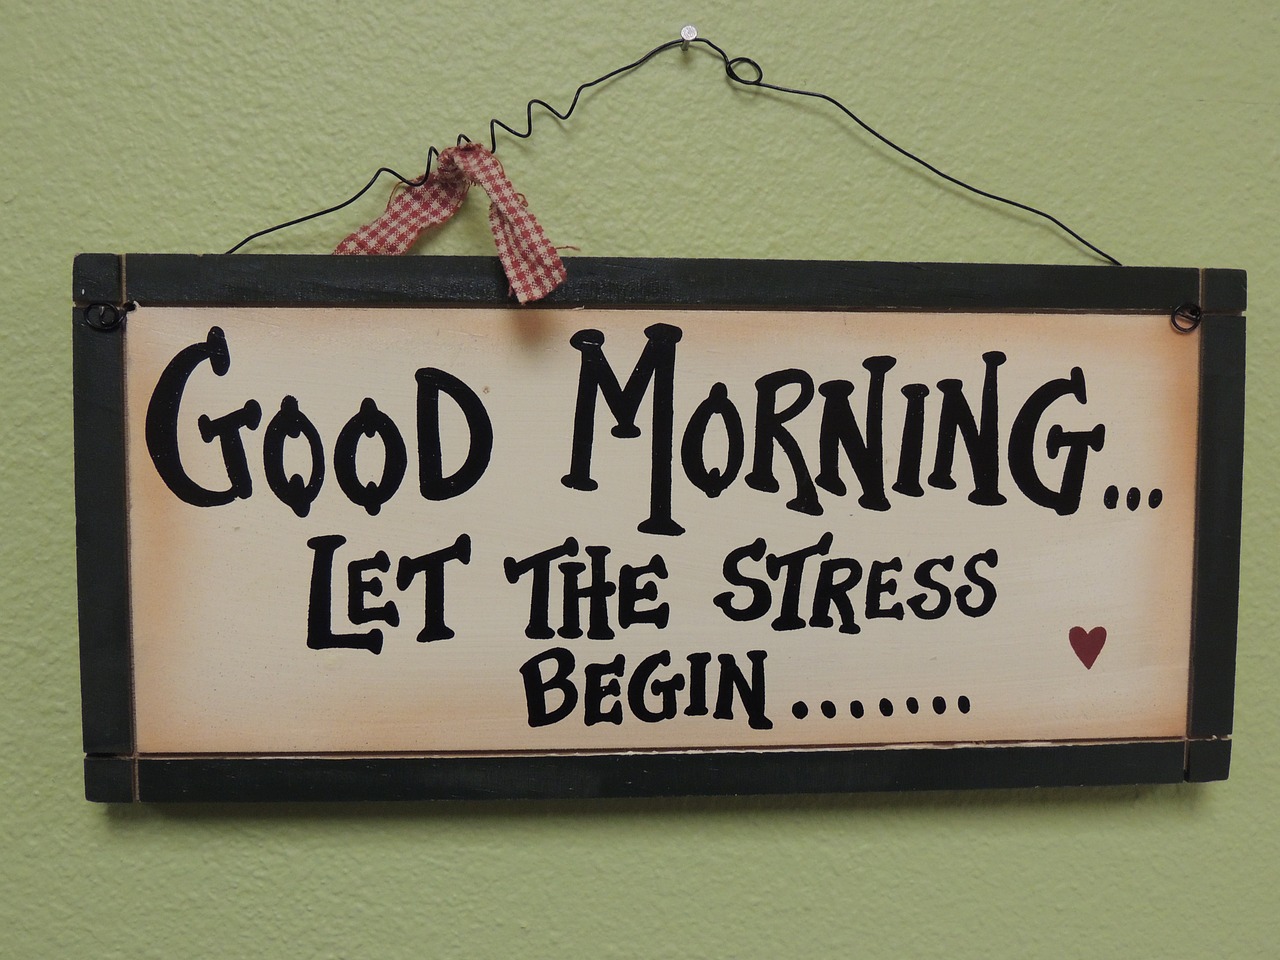 Stress - Pixabay